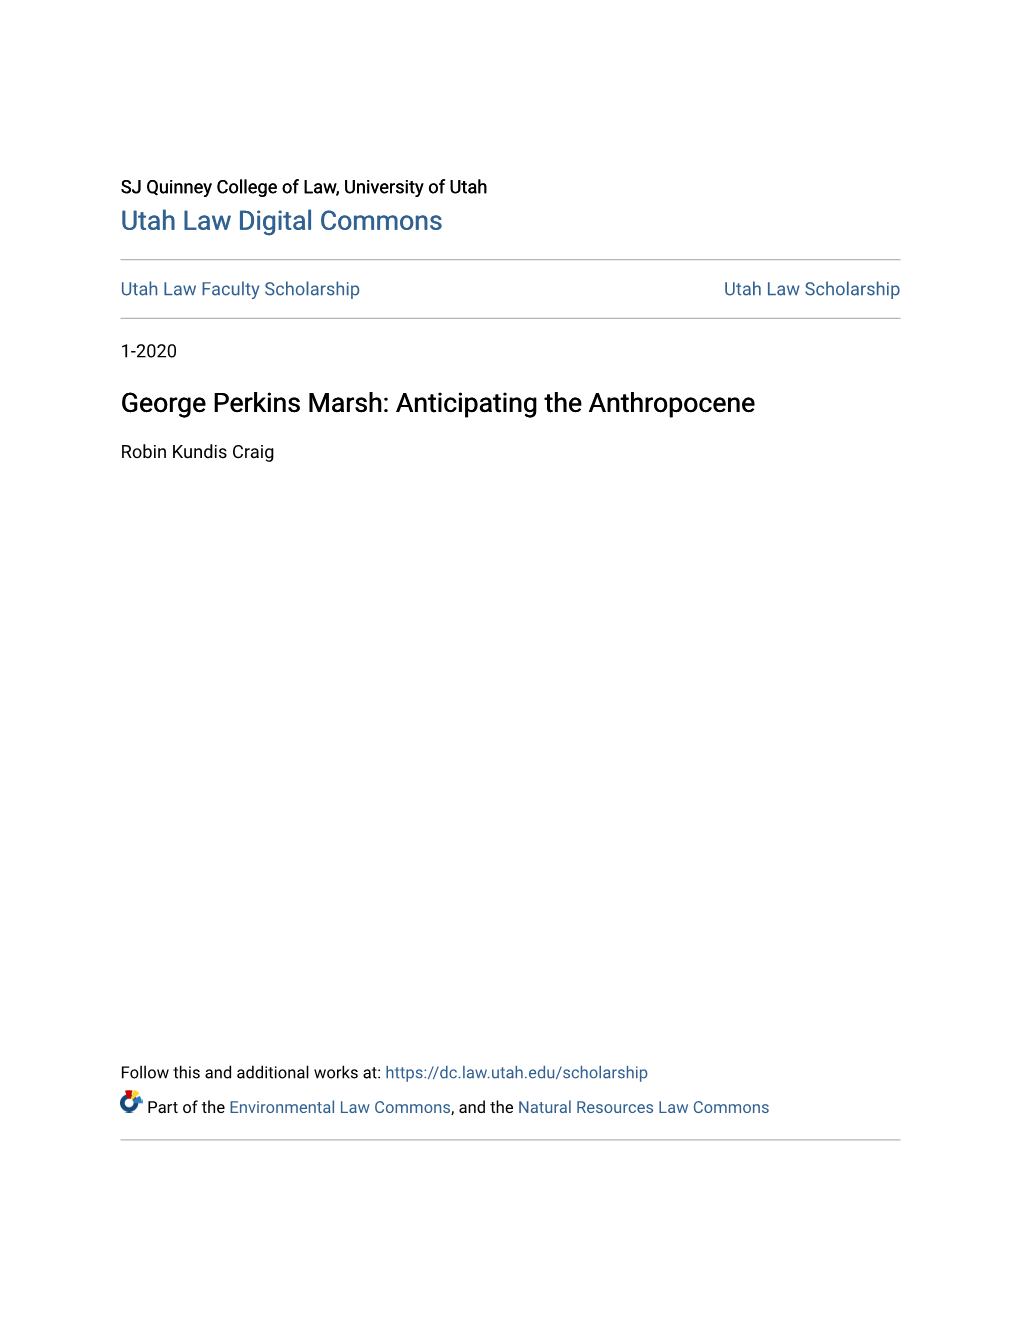 George Perkins Marsh: Anticipating the Anthropocene